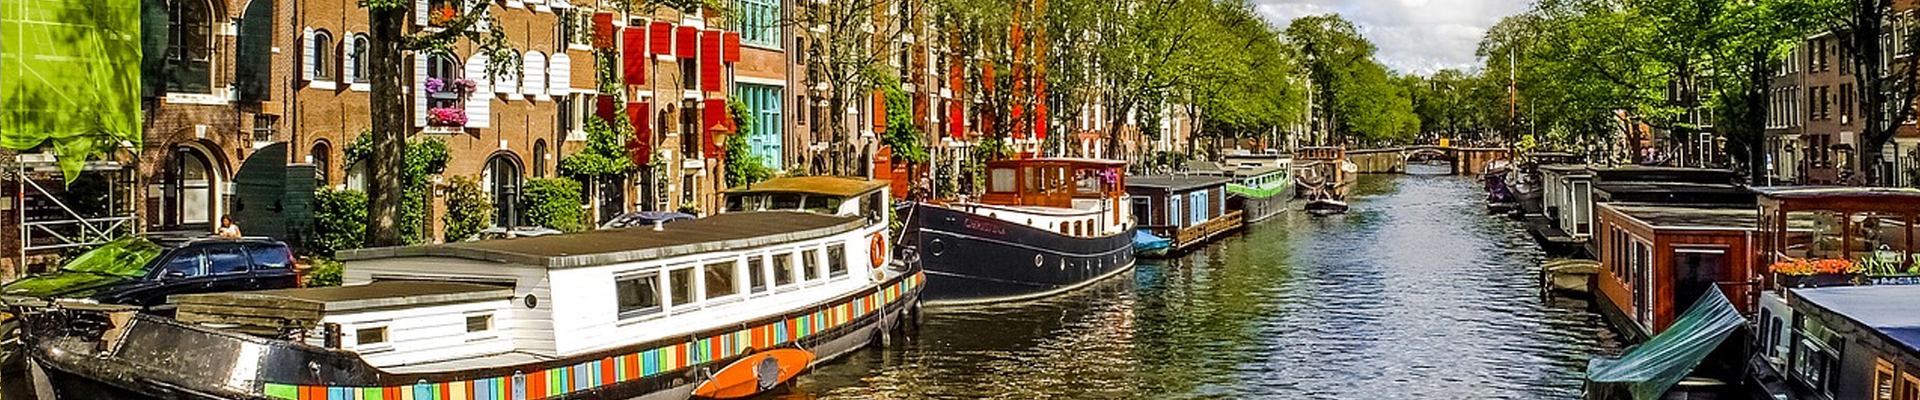 Amsterdamse groene gracht